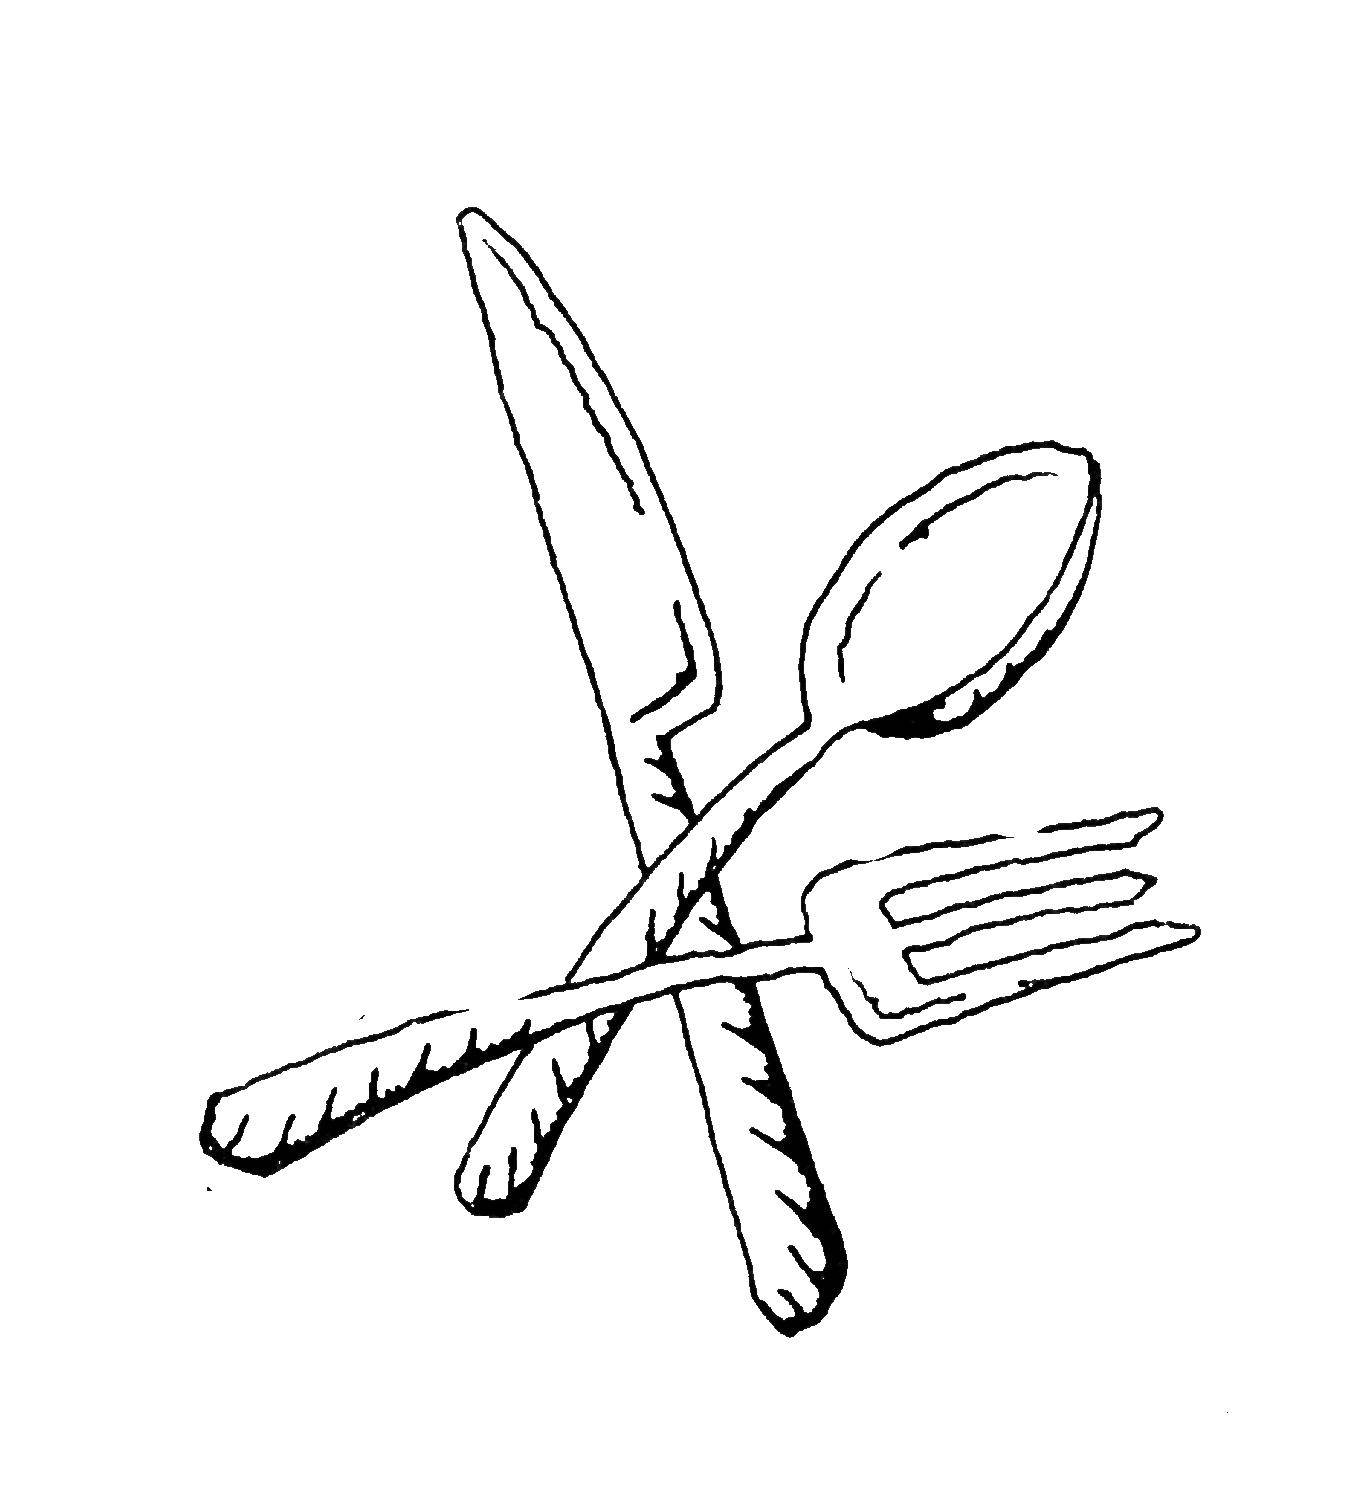 Coloring Cutlery. Category spoon. Tags:  Crockery, Cutlery.